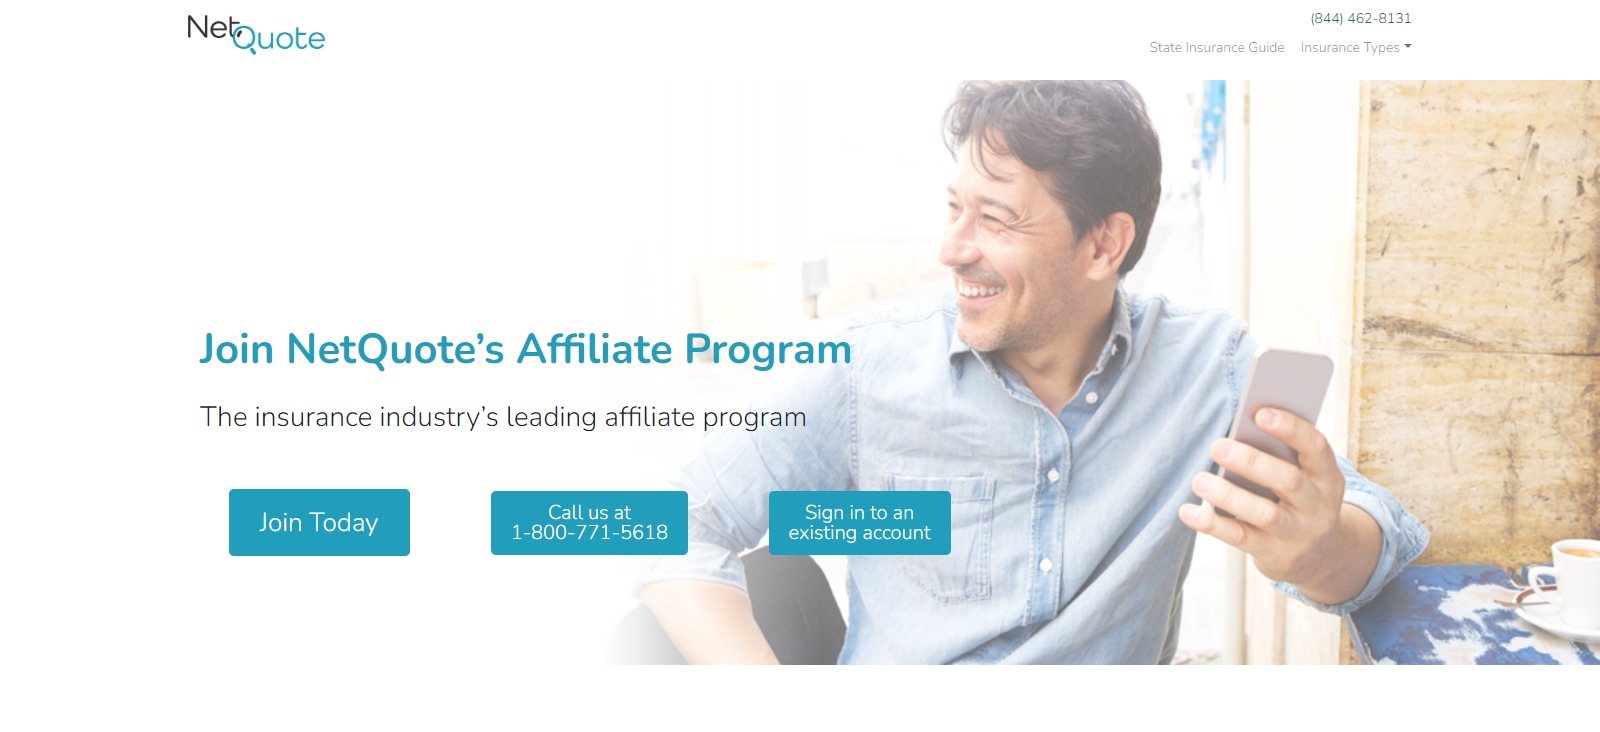 NetQuote Affiliates Program Review: $2.5 - $20 per Lead